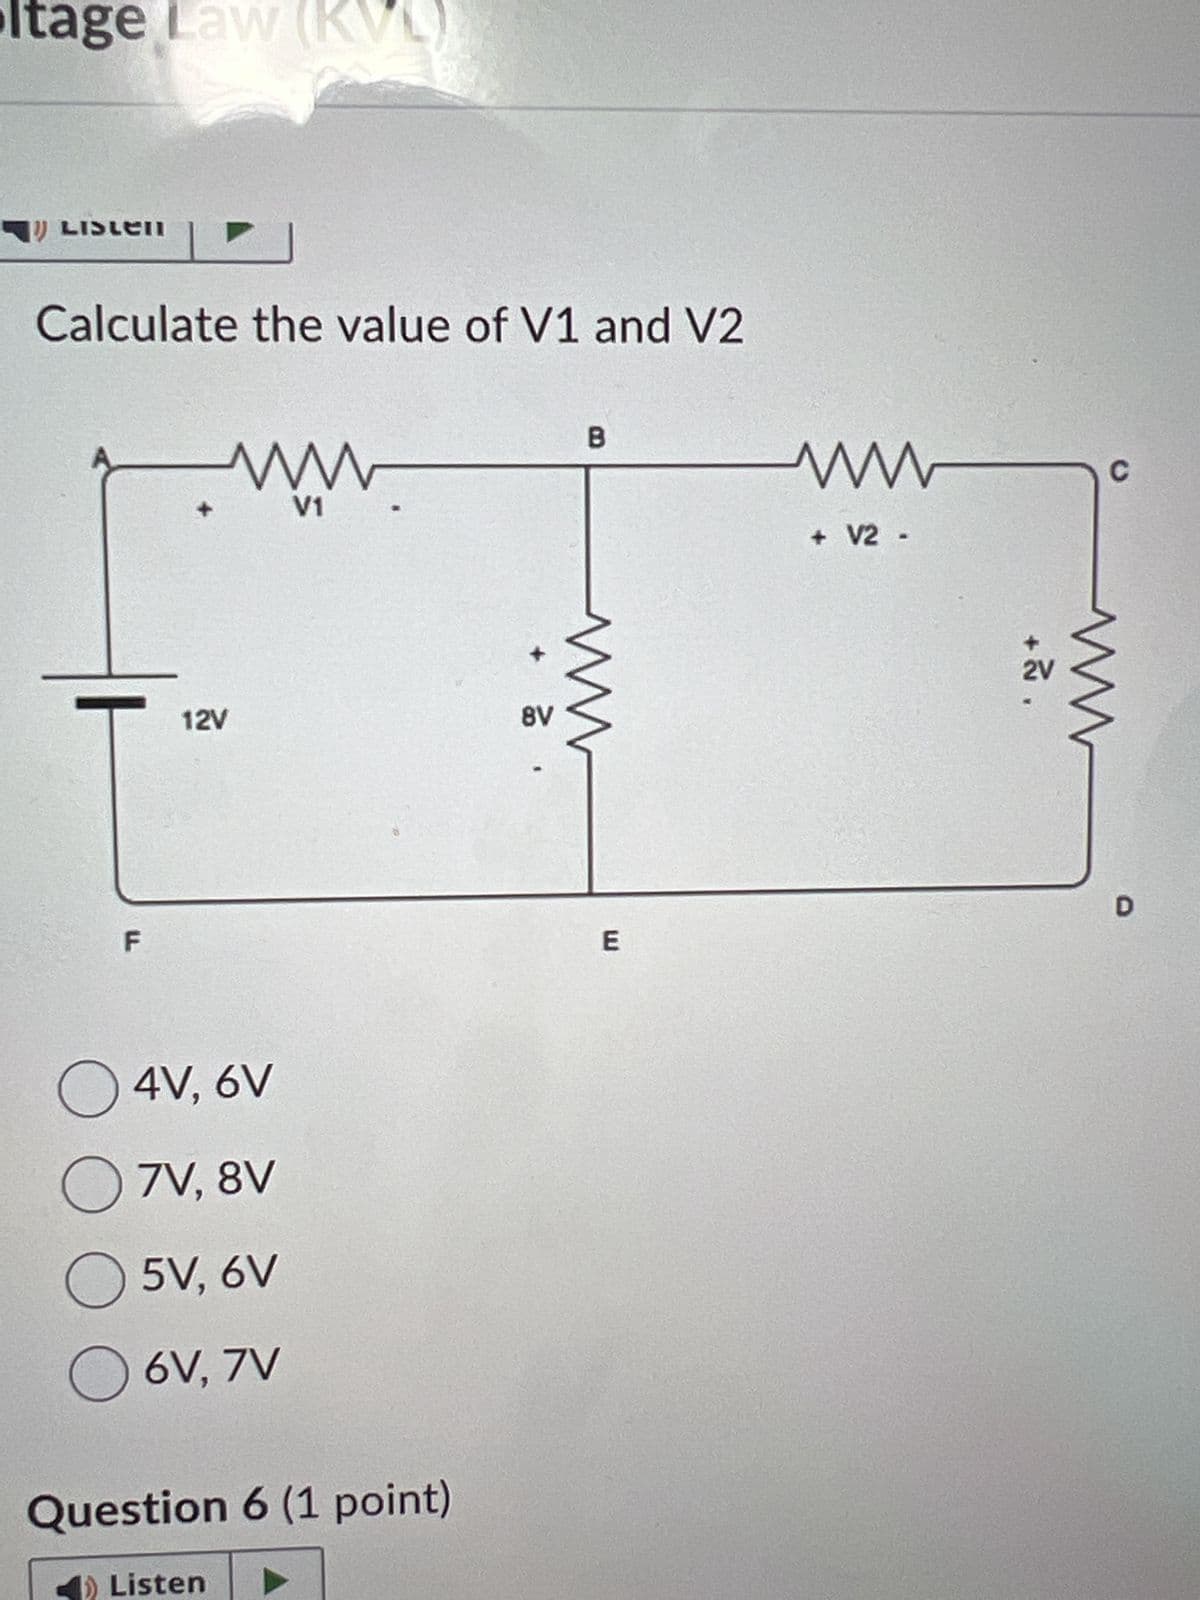 Itage Law (KVL)
LISLENI
Calculate the value of V1 and V2
www
V1
12V
4V, 6V
7V, 8V
5V, 6V
6V, 7V
Question 6 (1 point)
Listen ►
8V
B
E
+ V2 -
+
2V
A
C
ww